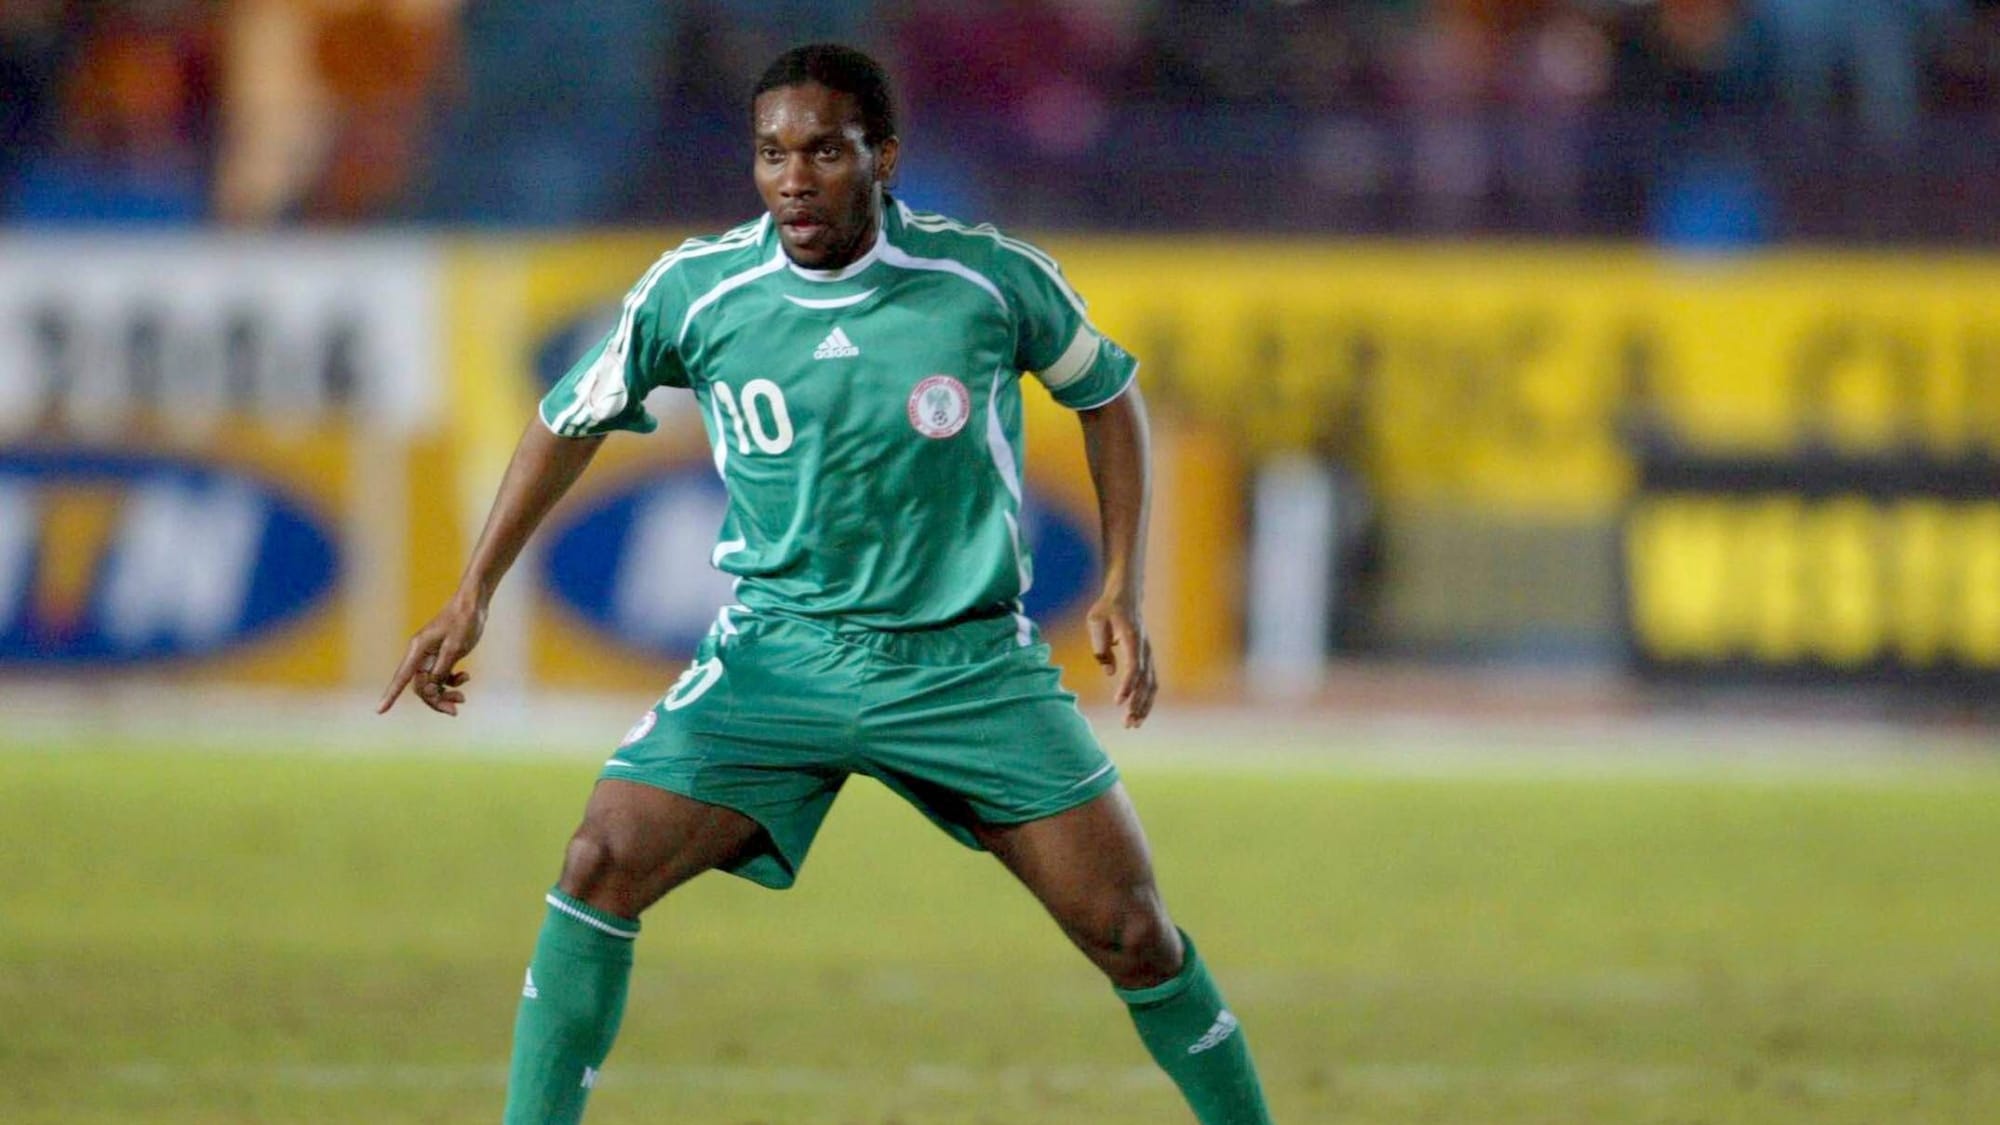 Augustine Okocha (Nigeria) am Ball Fußball Länderspiel Herren Africa Cup of Nations 2006, African, Coupe D Afrique des, ACN, CAN, Afrikapokal, Afrika Pokal Einzelbild pan12485 o0 Nationalteam Kairo Dynamik,